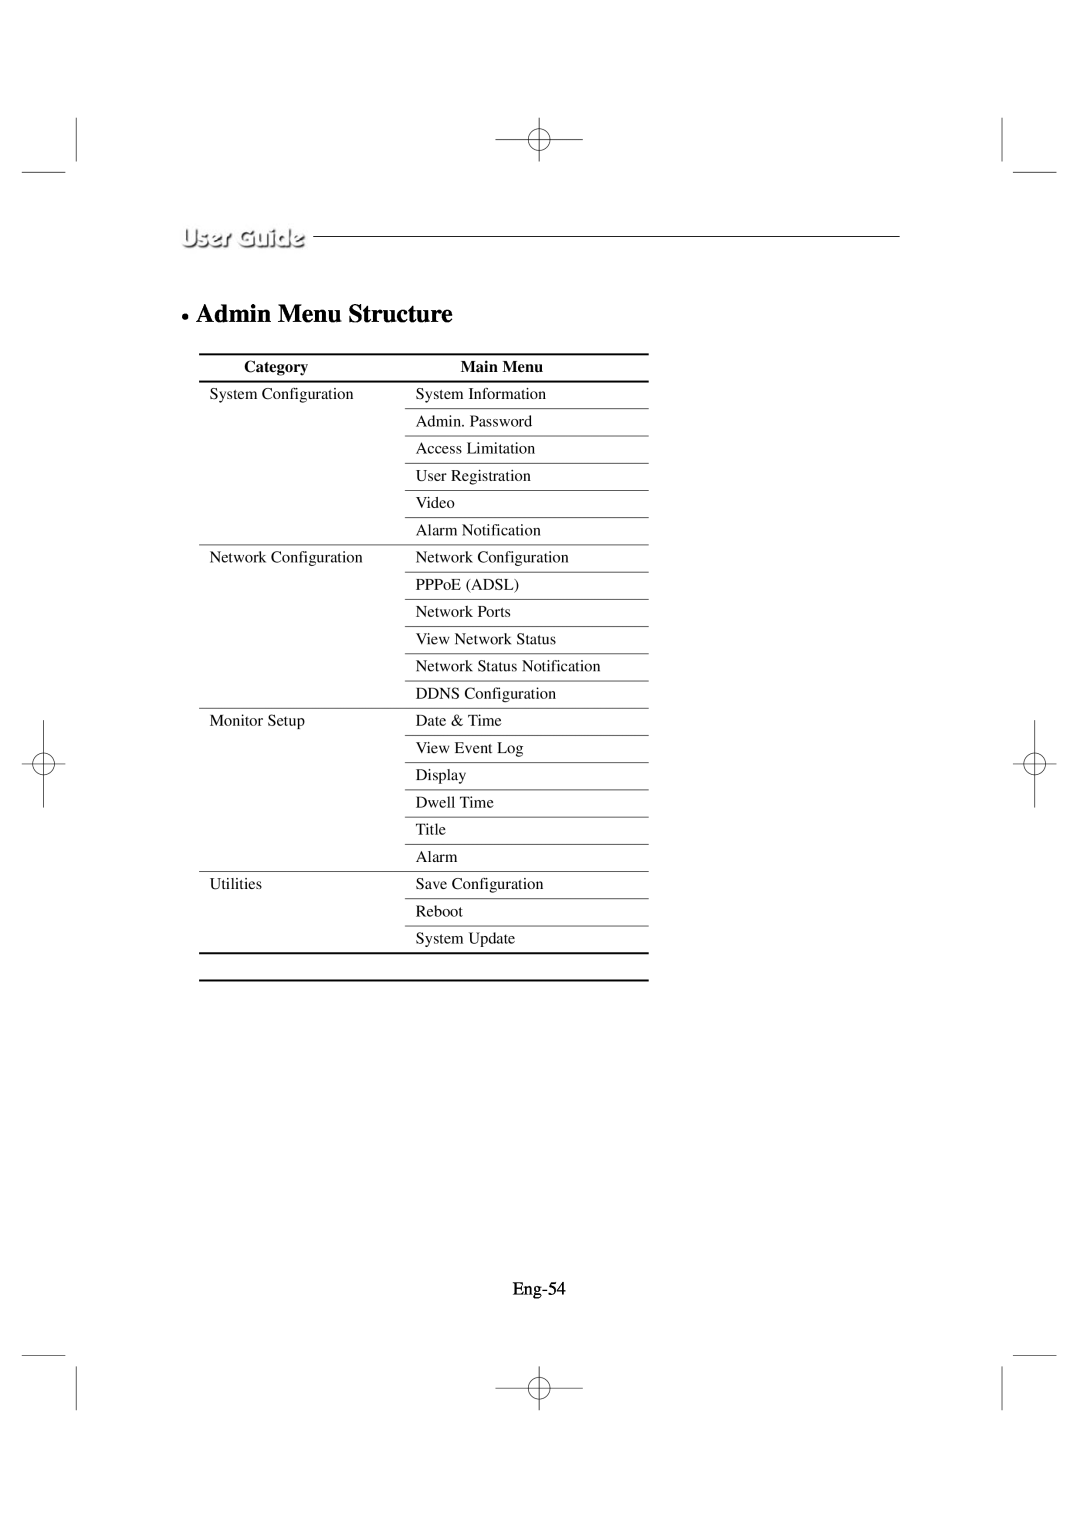 Samsung SSC17WEB manual Admin Menu Structure, Eng-54, Category, Main Menu 